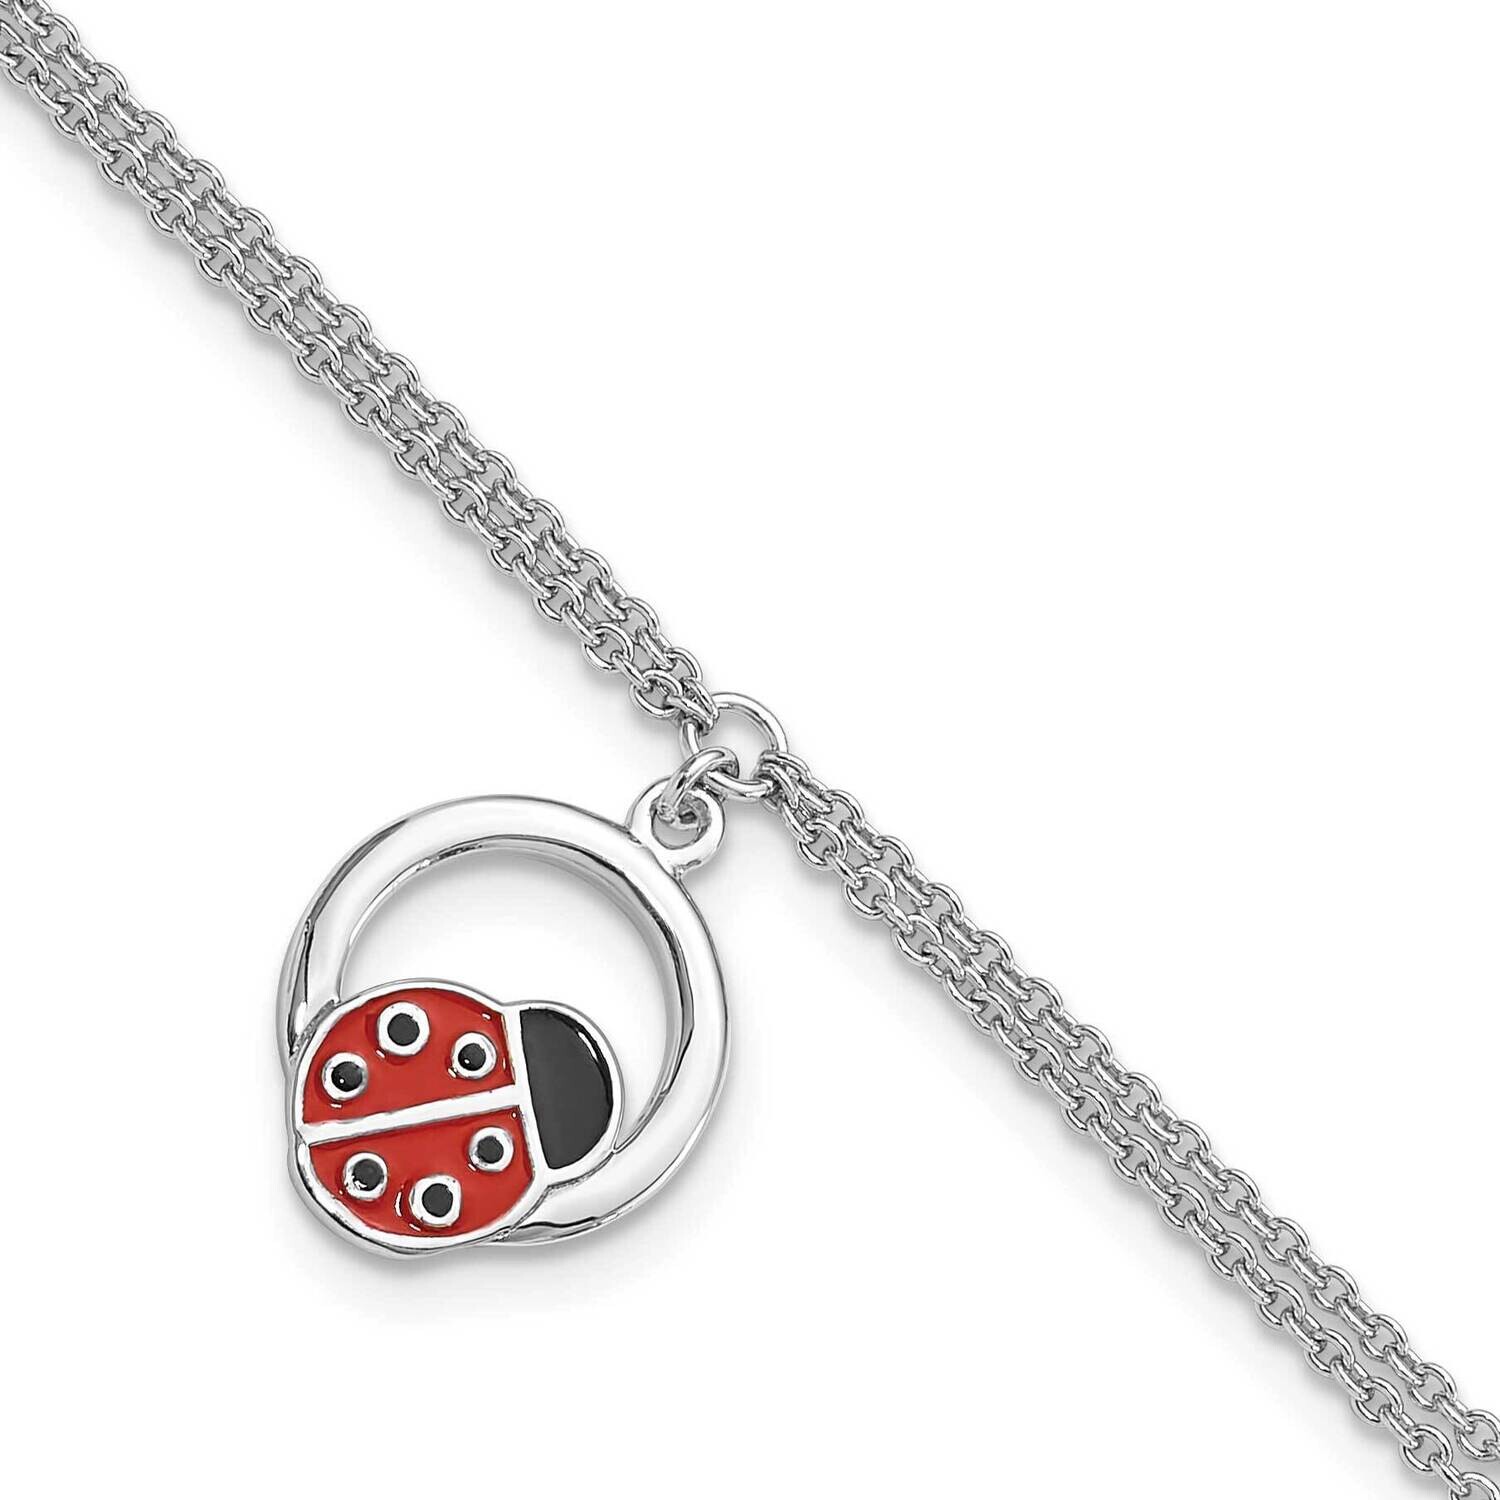 Rhod-Pltd Enamel Ladybug On Ring 7.25 Inch 1 Inch Extension Bracelet Sterling Silver QG6371-7.25